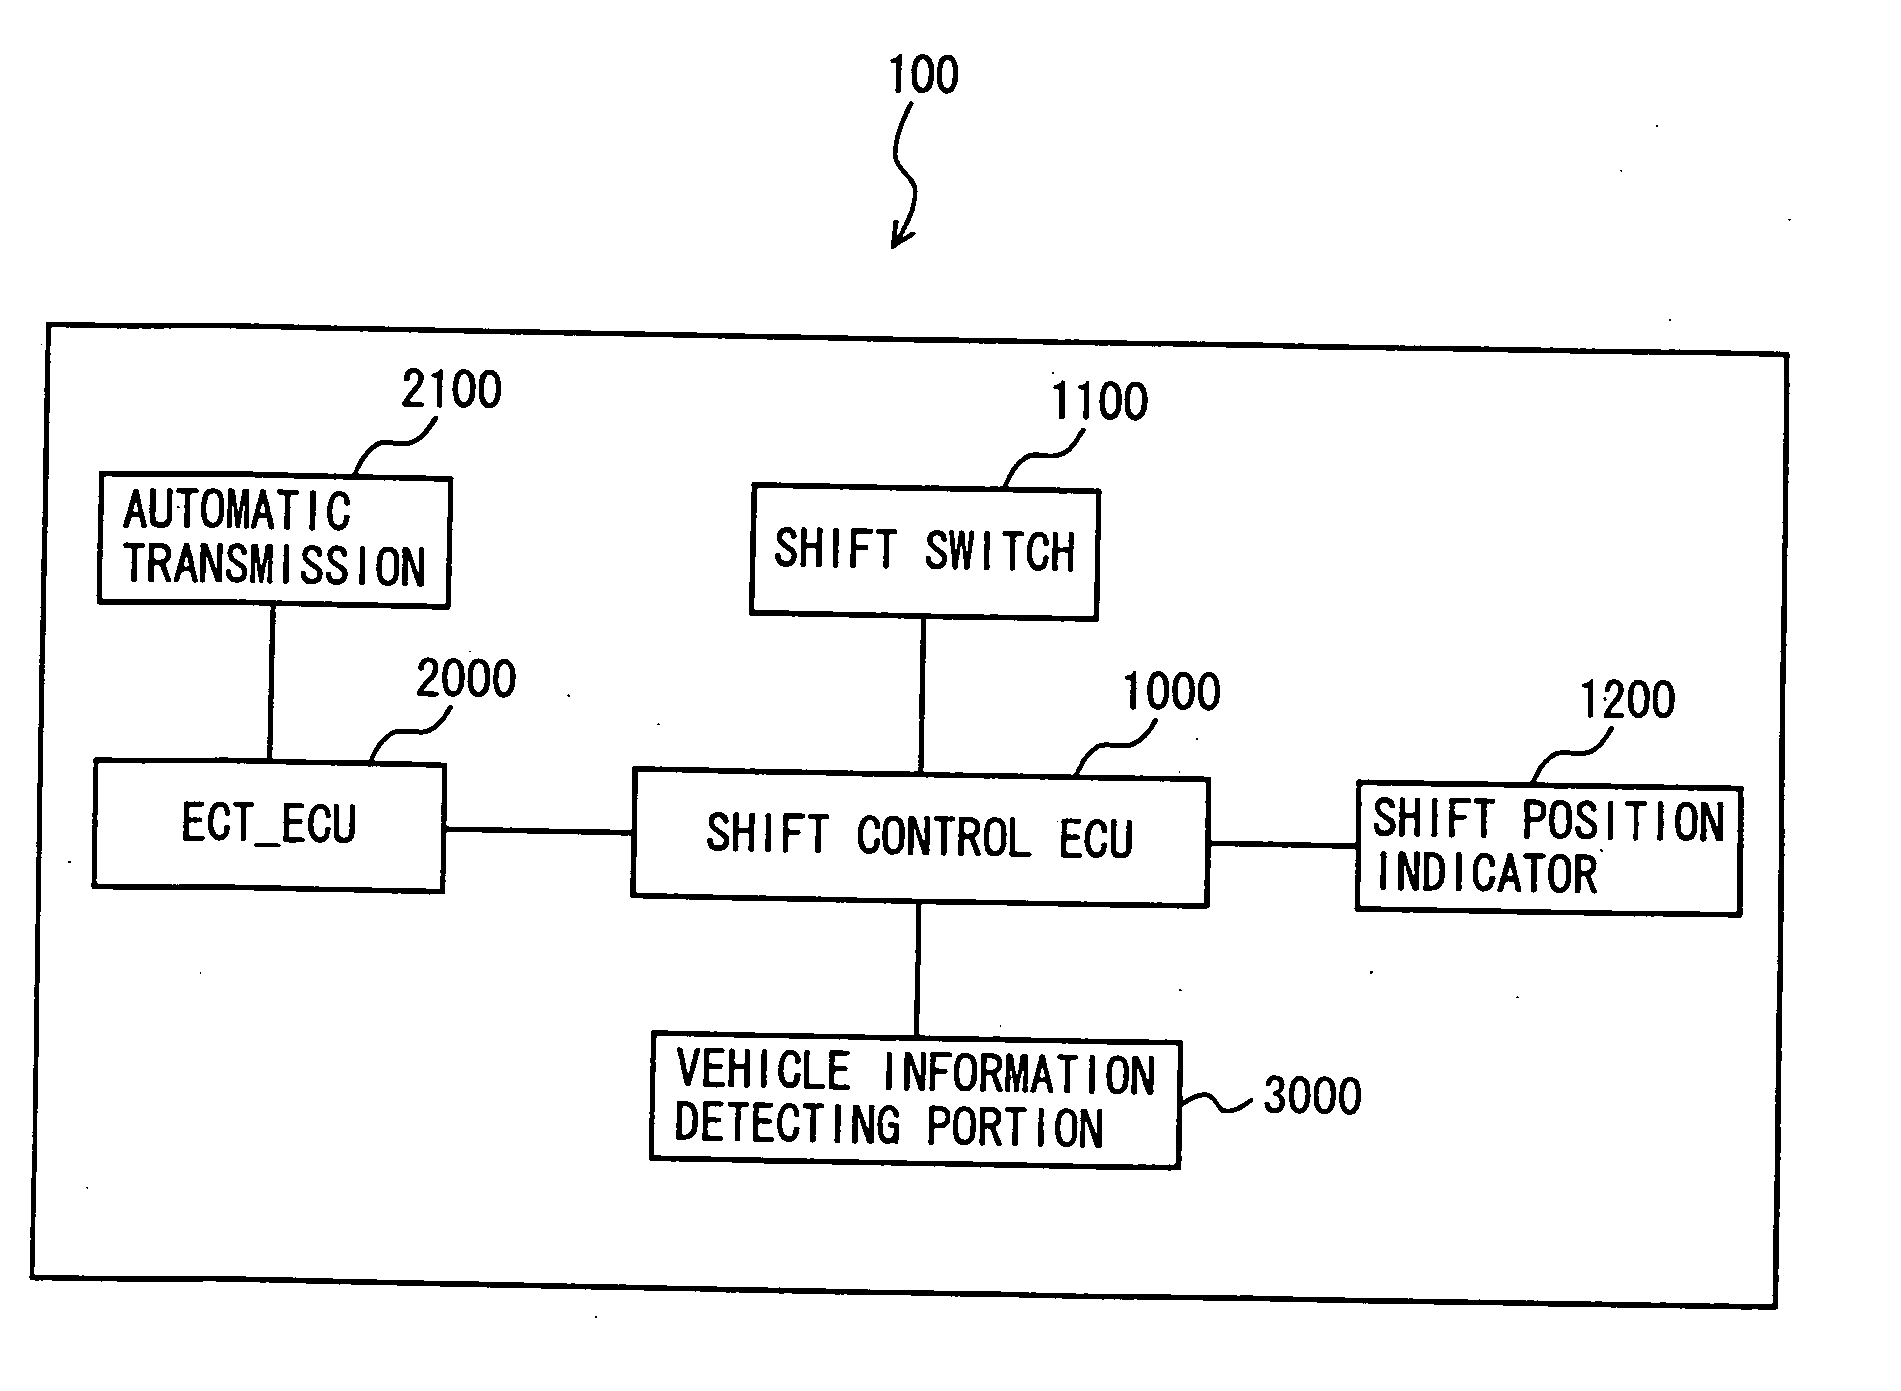 Shift device of transmission